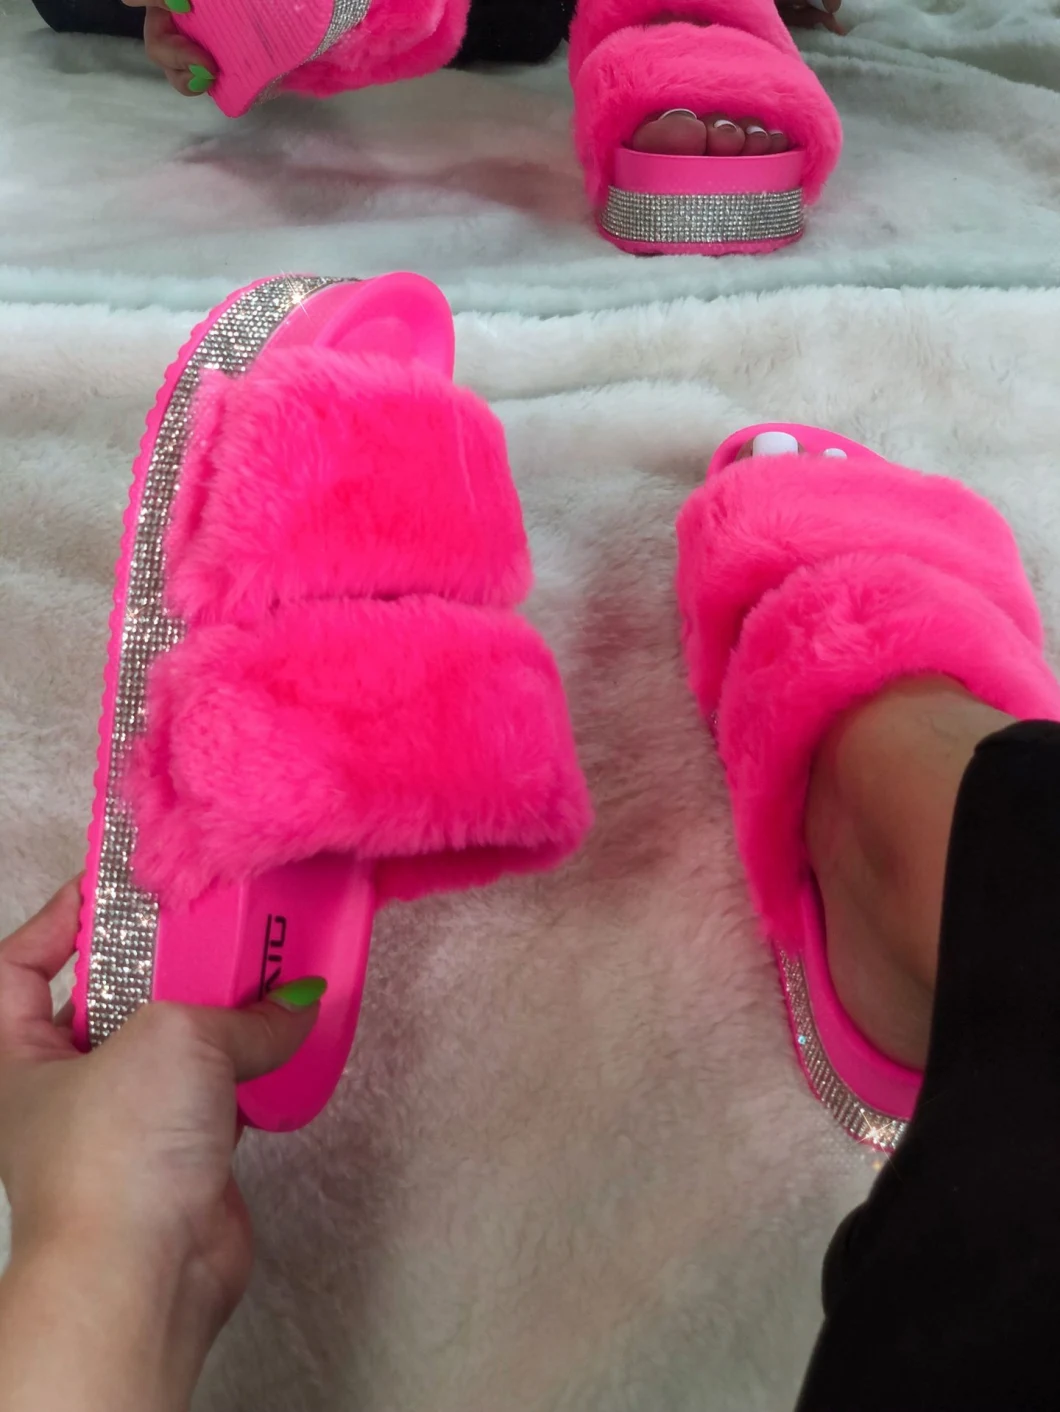 Wholesale Fur Slippers for Women Open Toe Flats Slides Sandals Soft Warm Bedroom Slippers